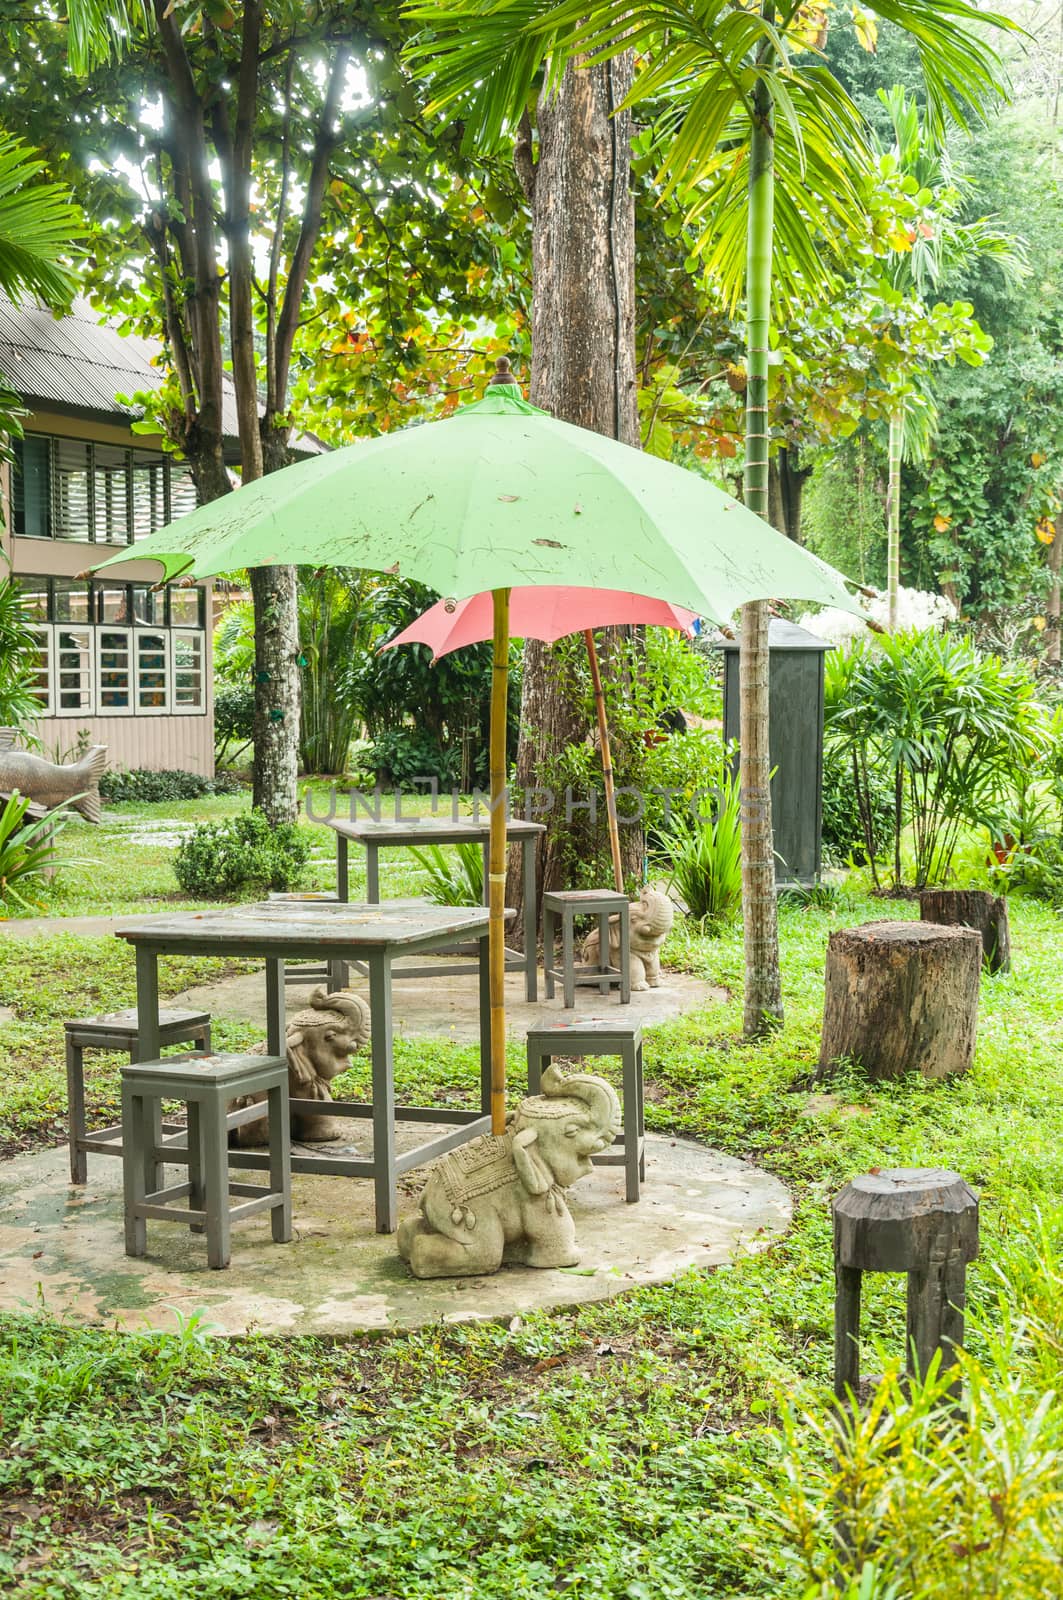 Table and green umbrella in the garden